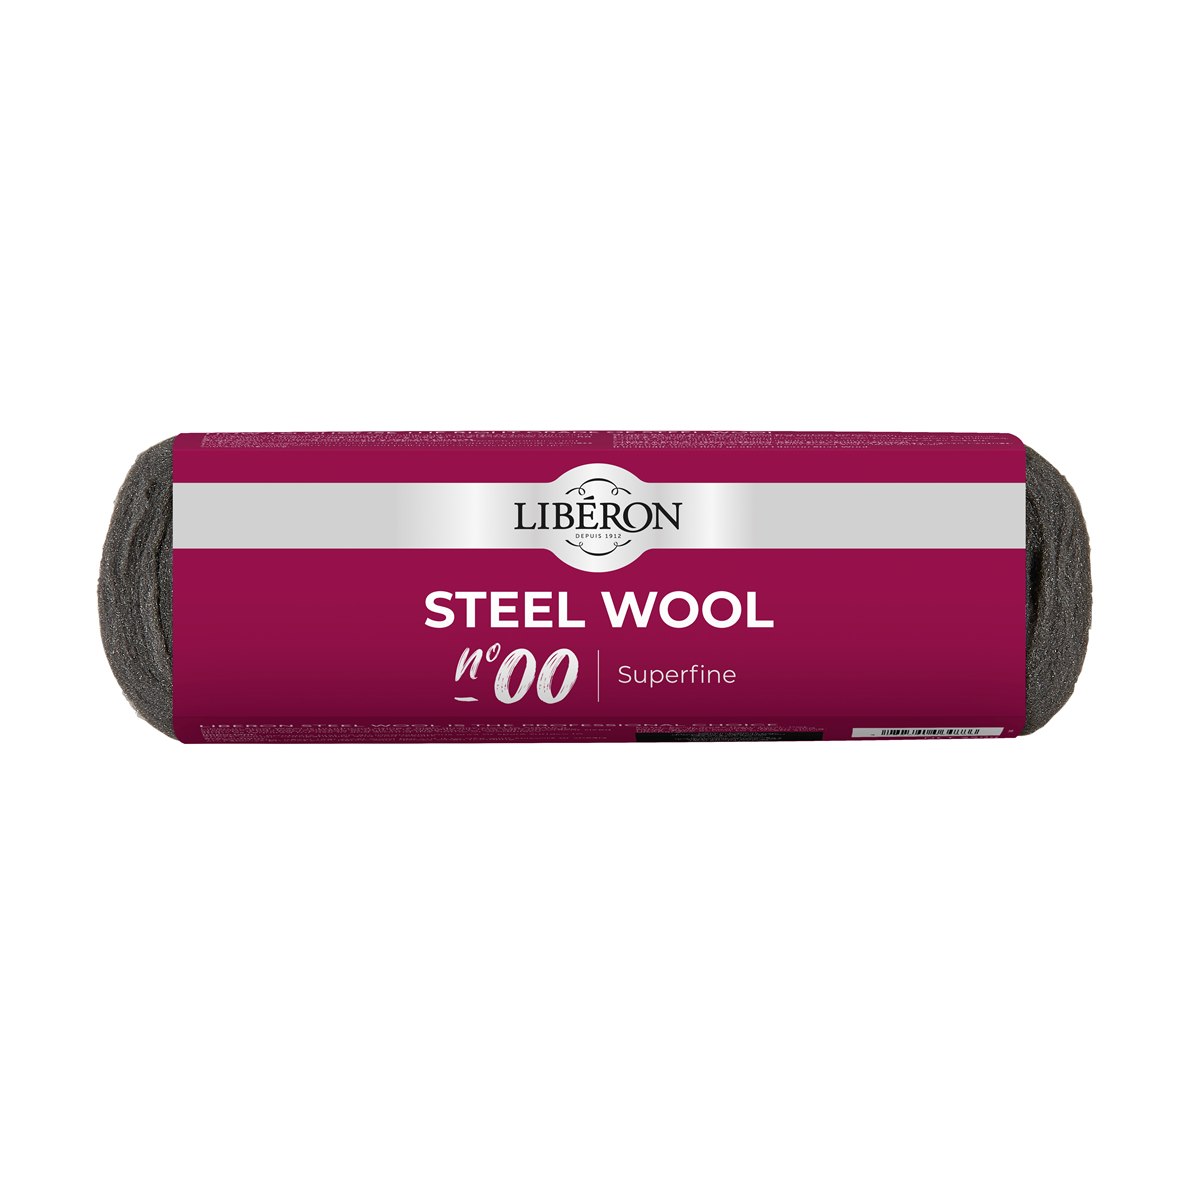 Liberon Steel Wool Superfine (Grade 00) 250g